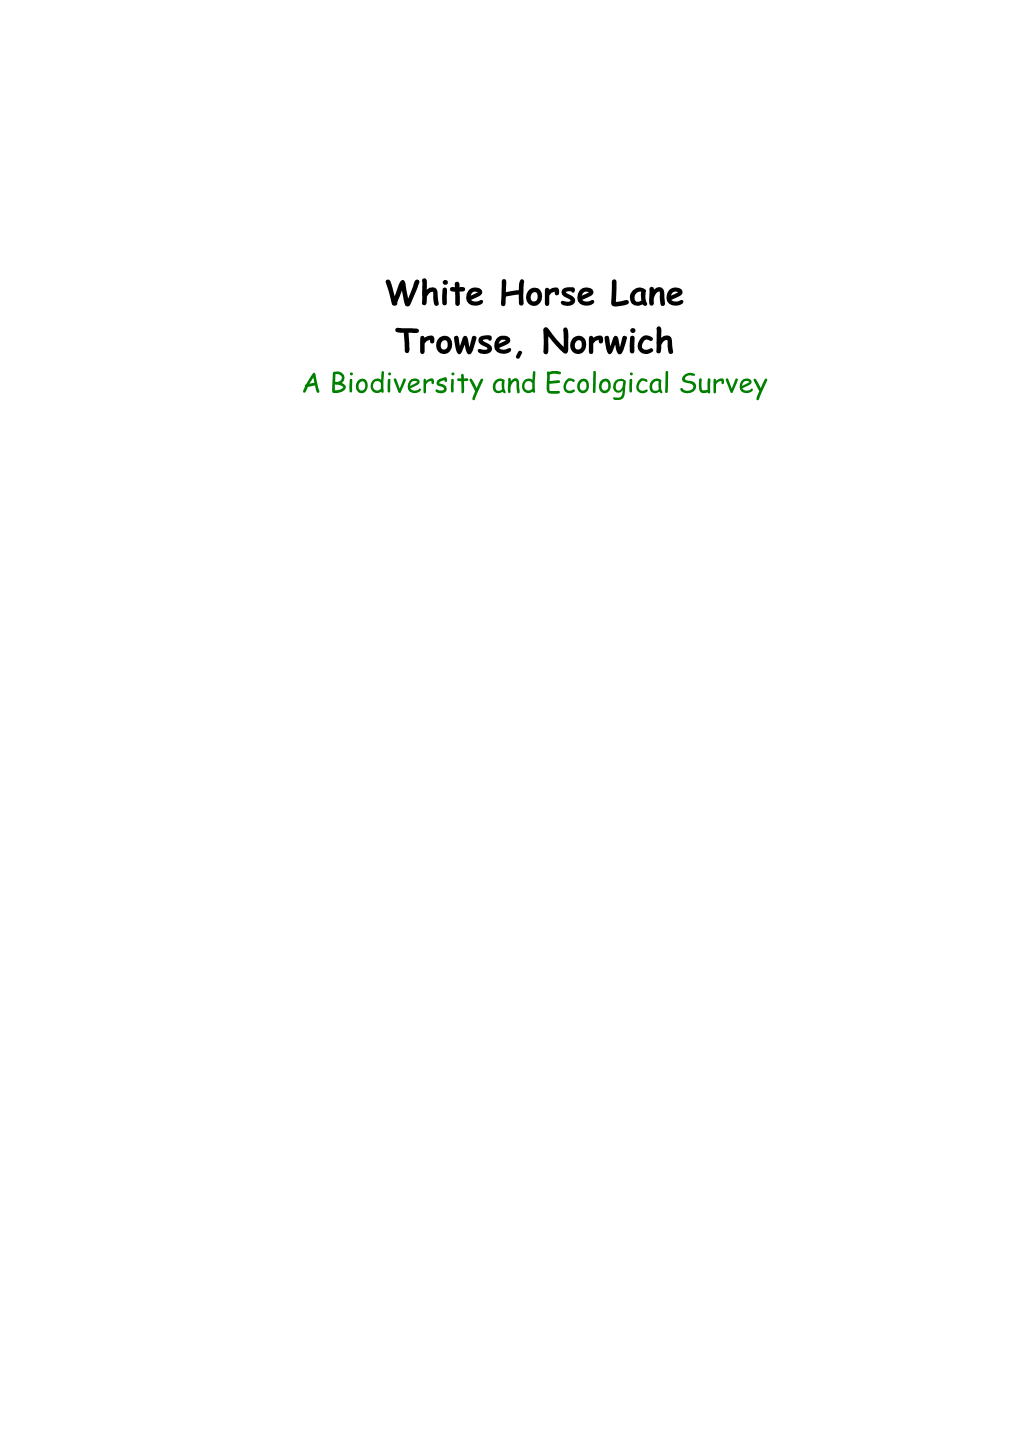 White Horse Lane Trowse, Norwich a Biodiversity and Ecological Survey Land on White Horse Lane Trowse